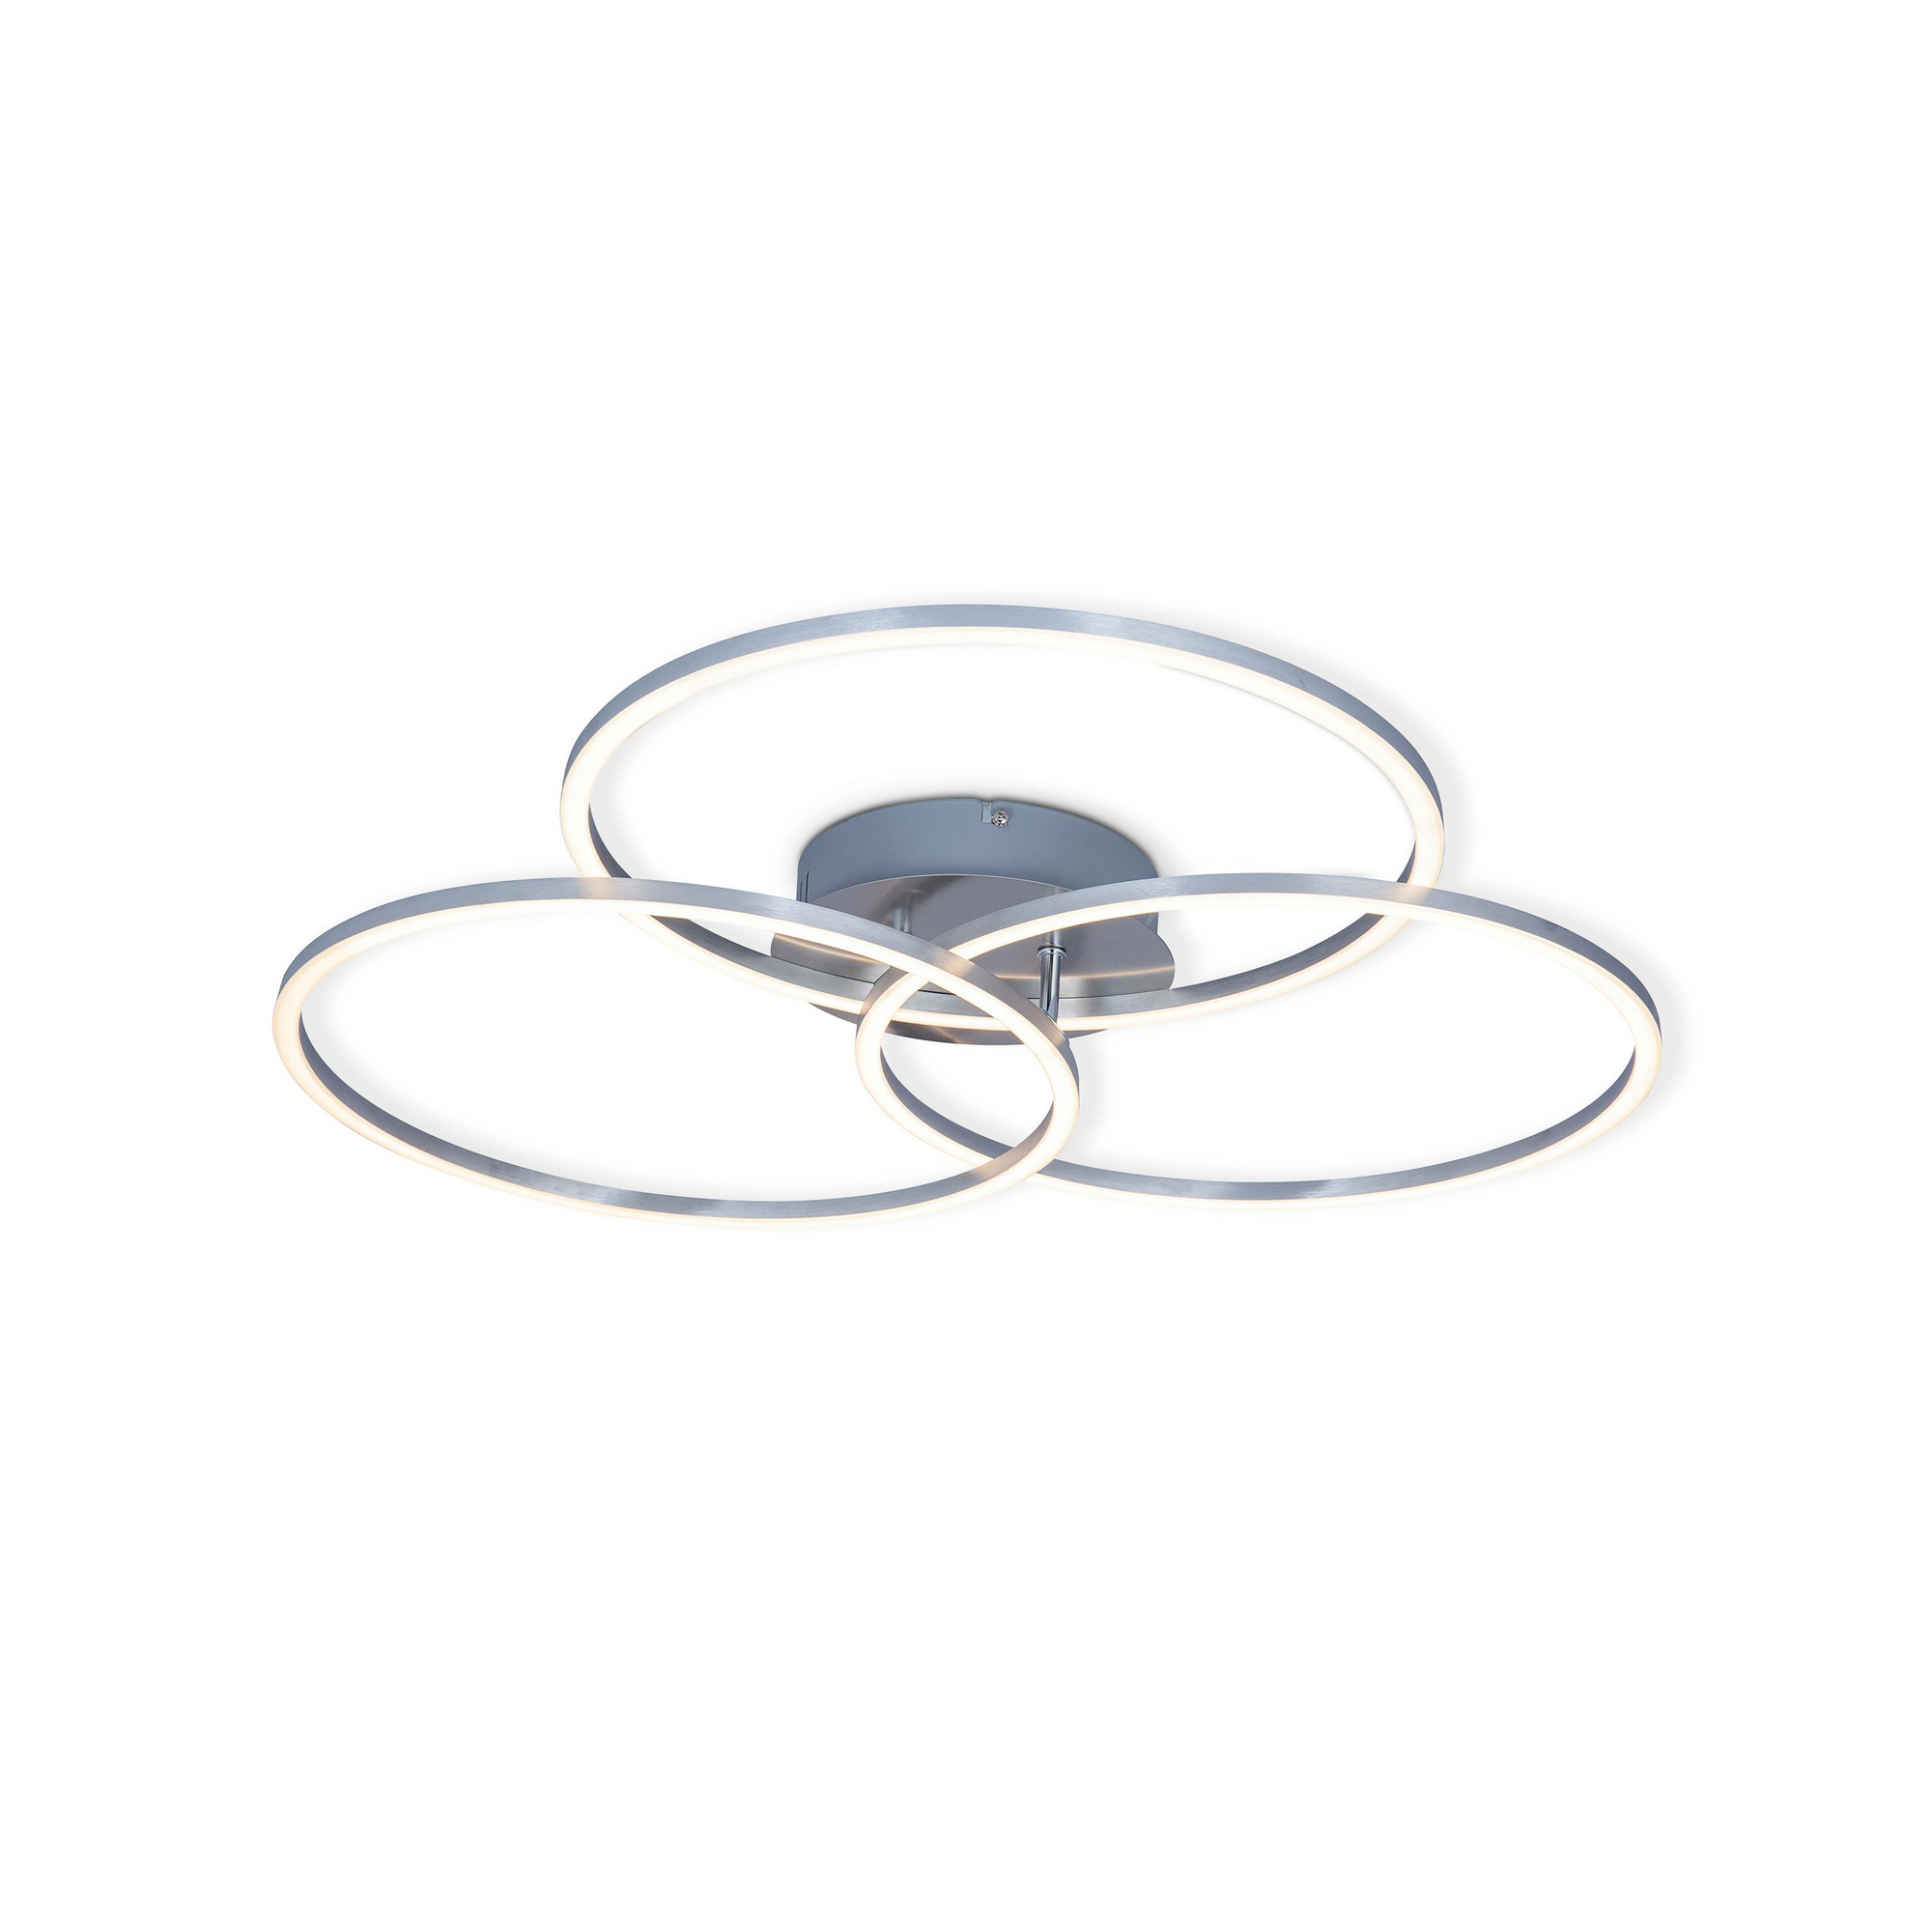 LED-Deckenleuchte 'Circle' 3 Ringe 60 W aluminiumfarben, mit Farbtemperatursteuerung + product picture